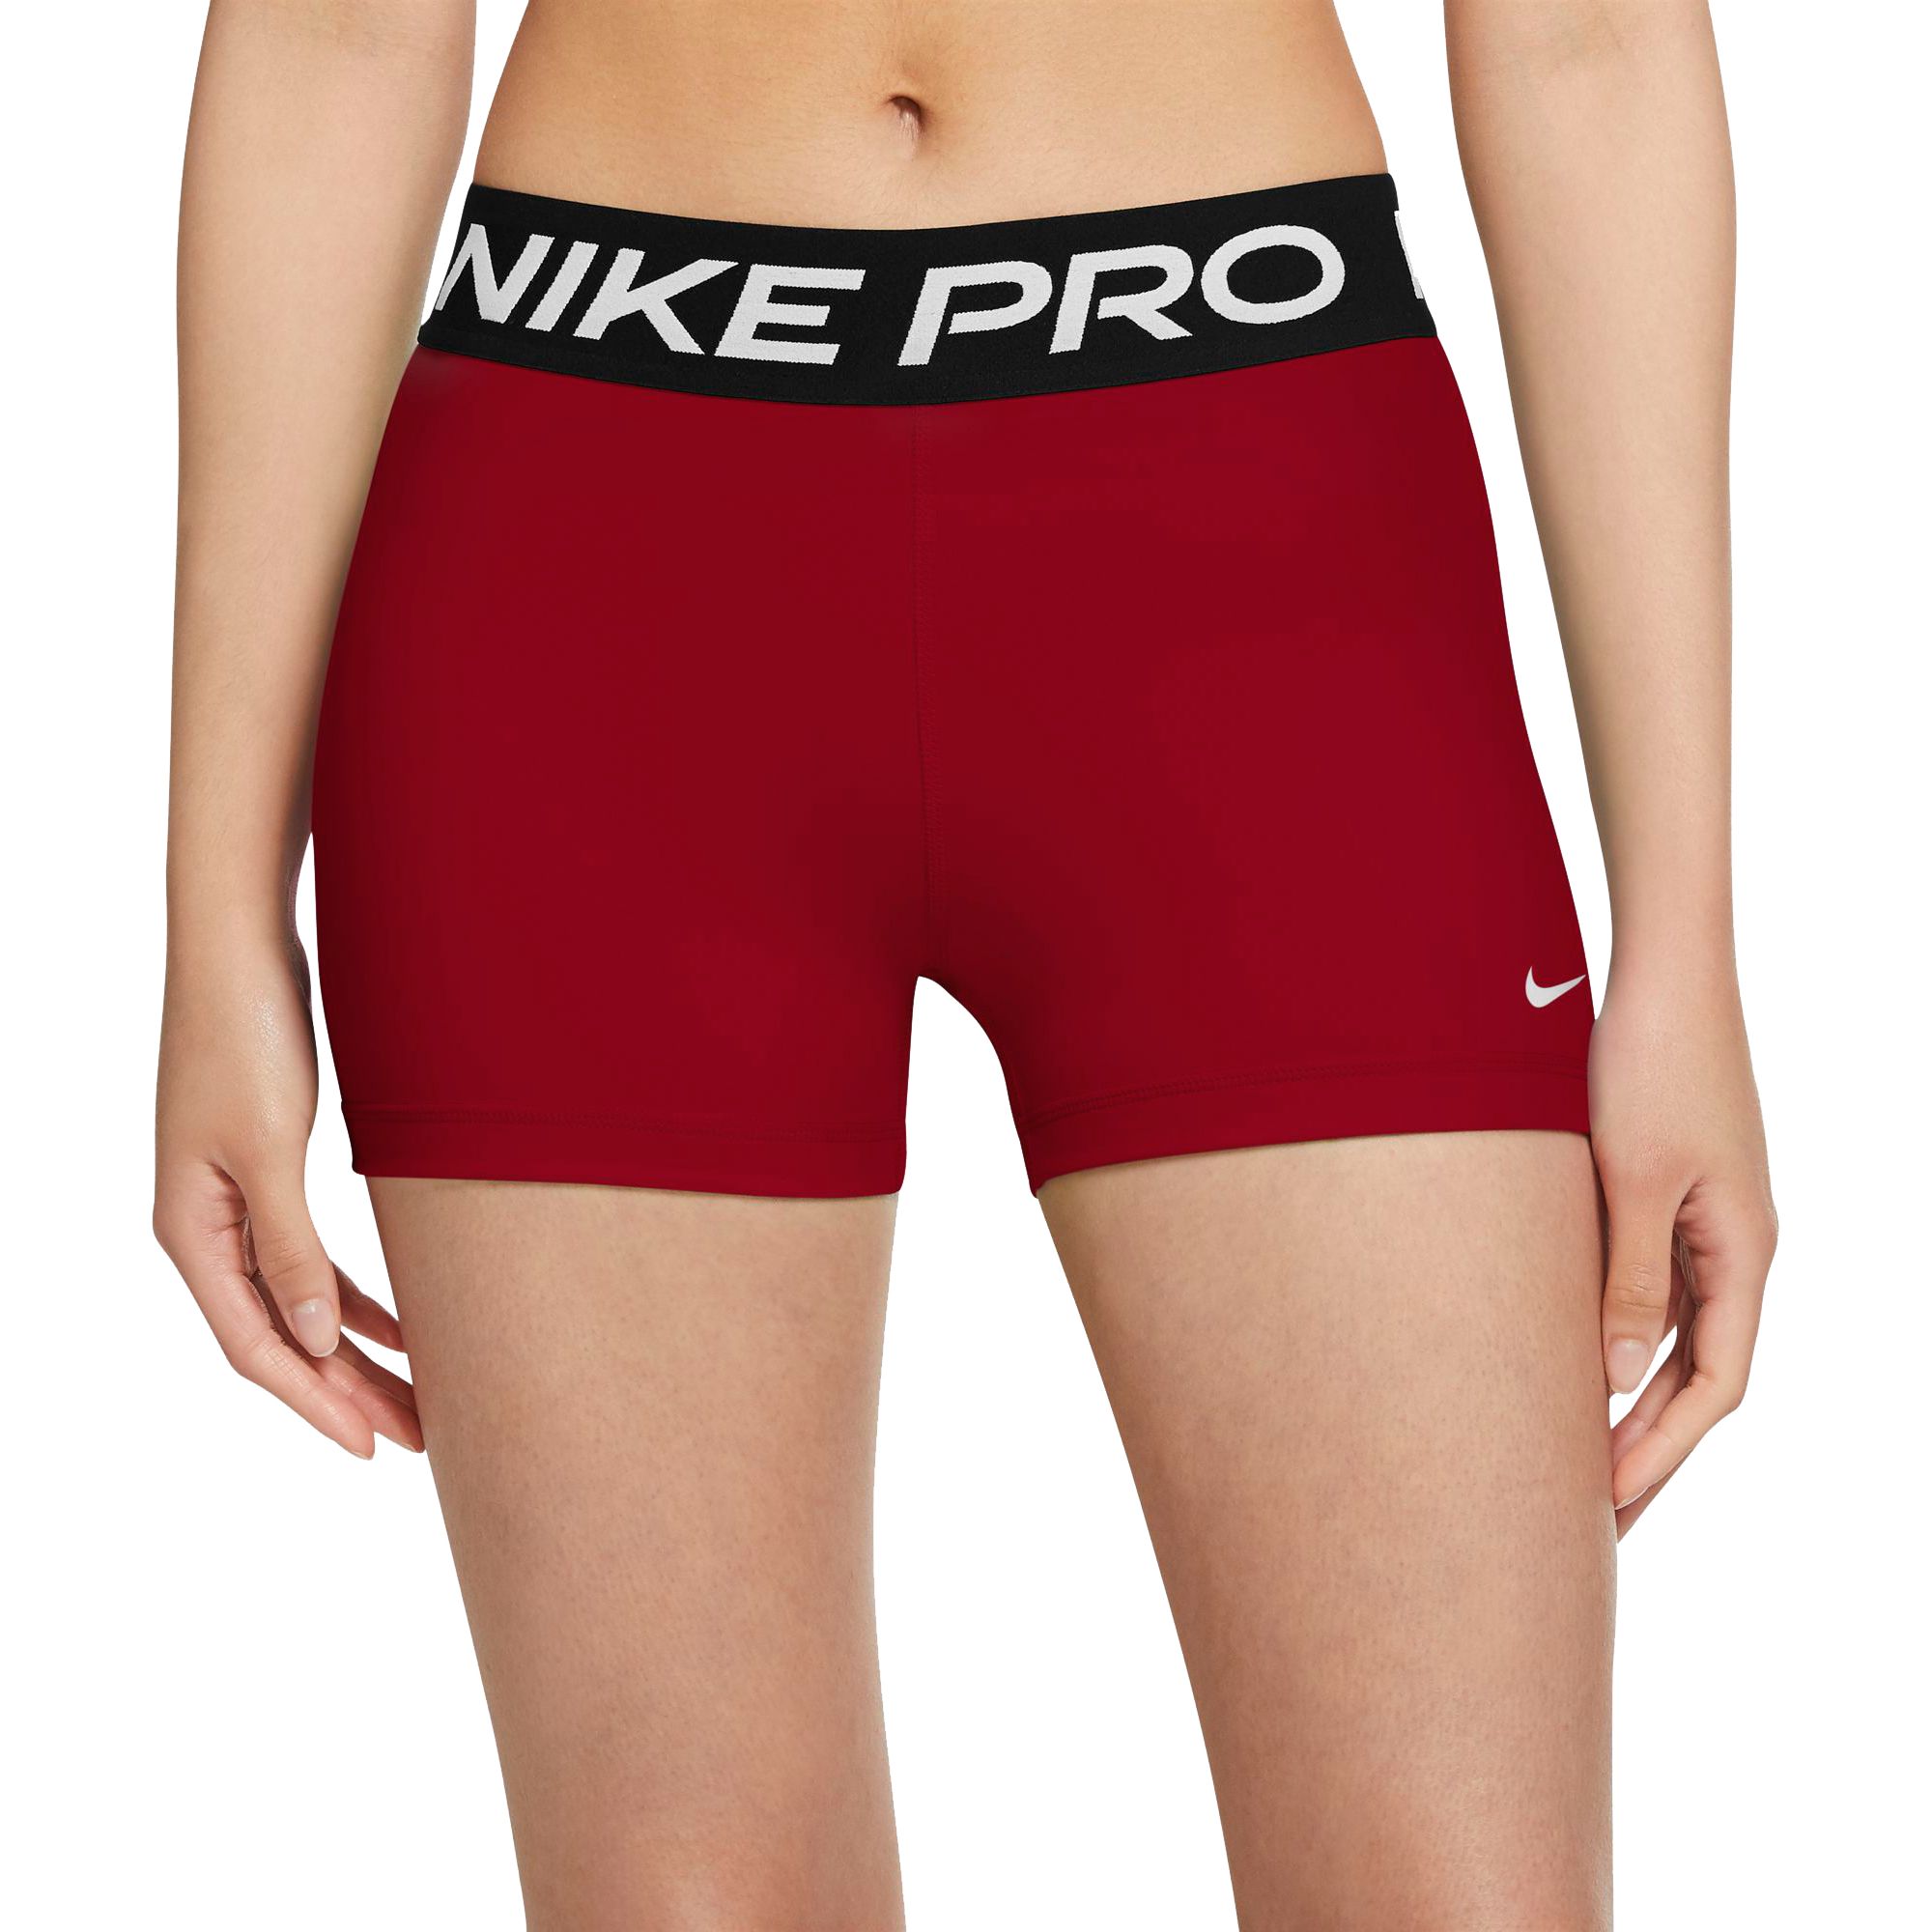 Nike Women's Pro 3 Training Shorts